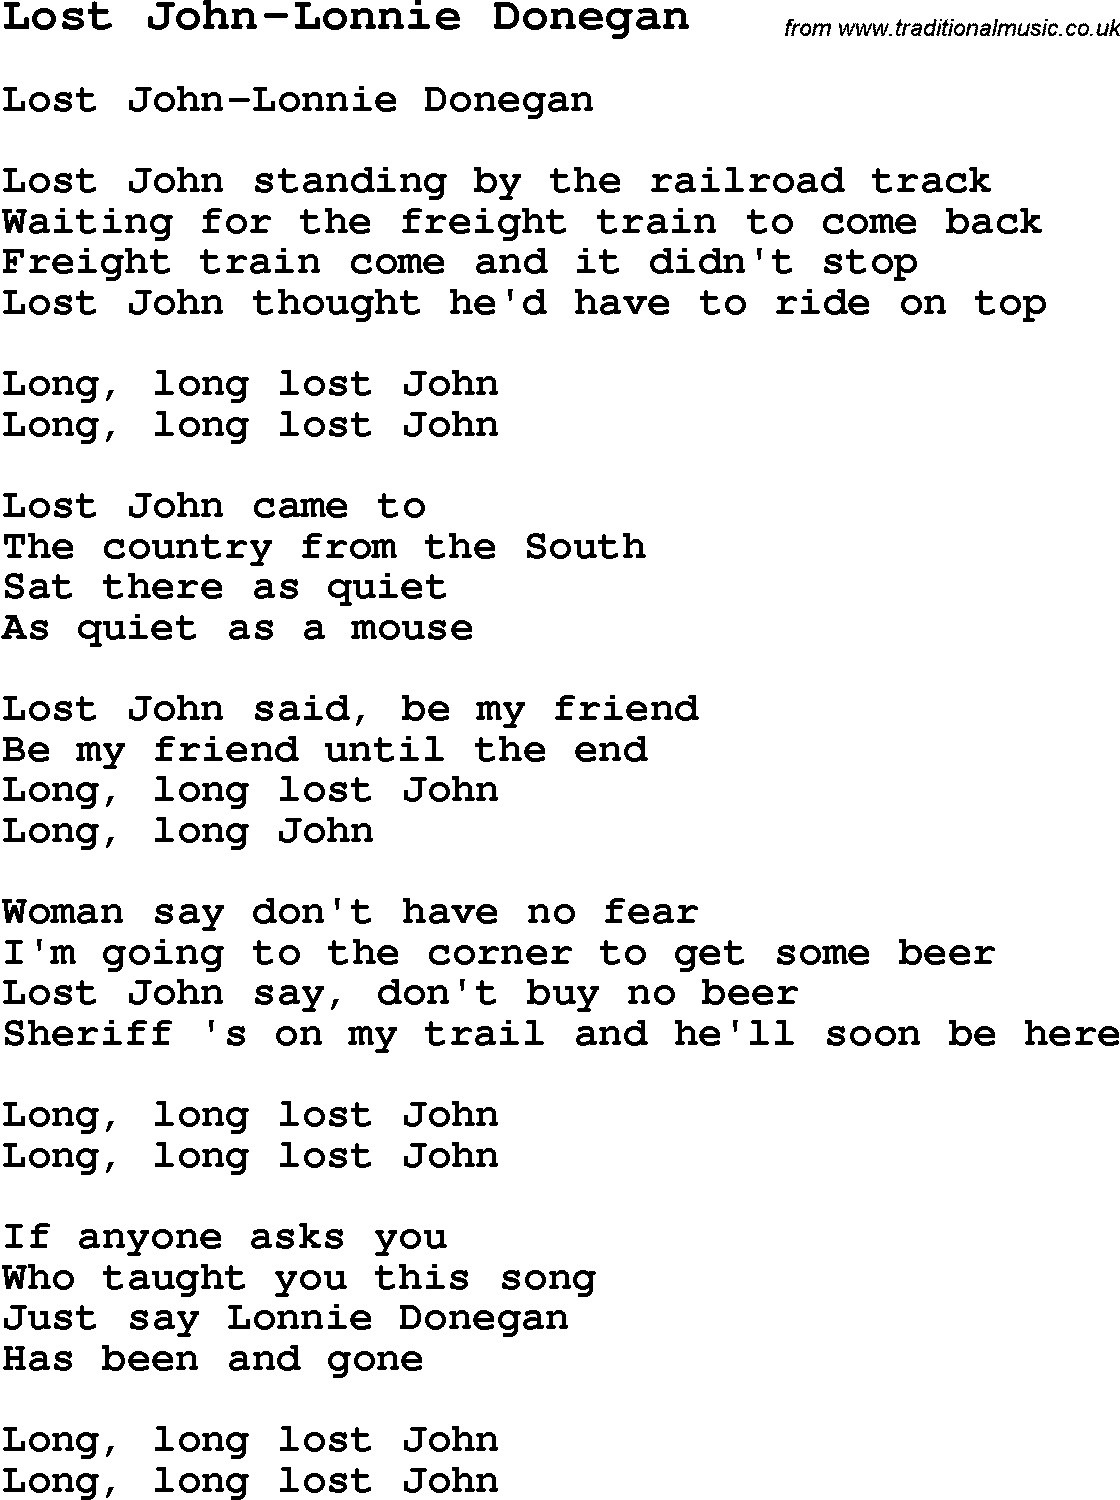 Skiffle Song Lyrics for Lost John-Lonnie Donegan.